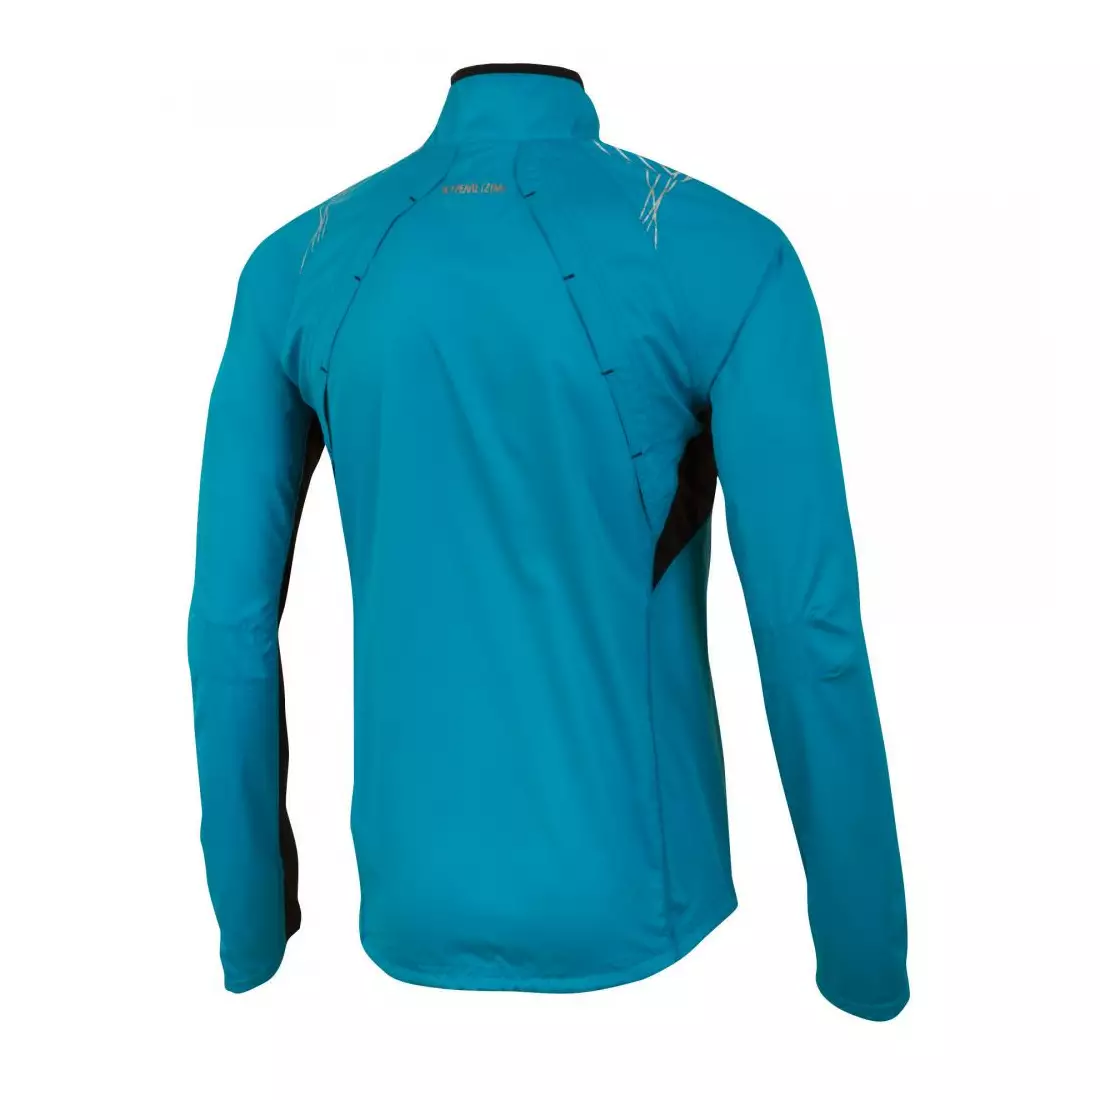 PEARL IZUMI - ELITE Infinity Jacket 12131101-3PK - pánská běžecká bunda, barva: Modrá